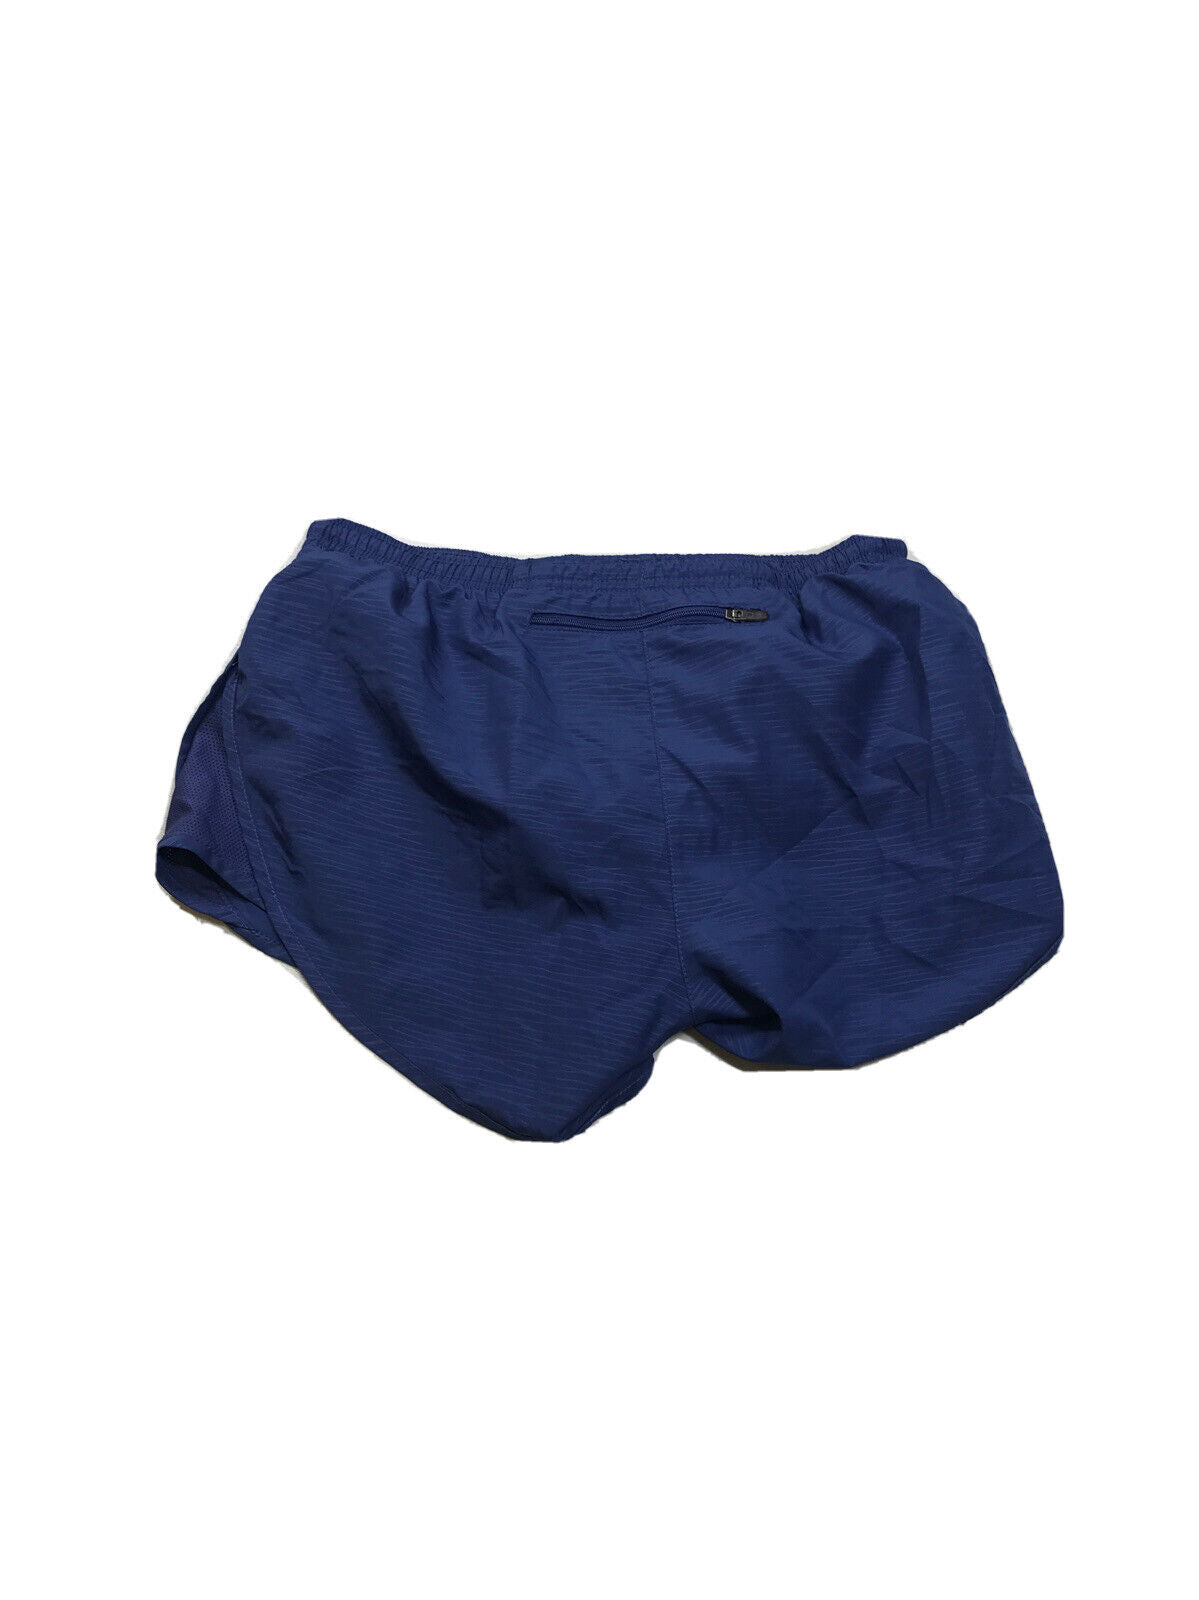 Nike Pantalones cortos deportivos para correr con forro Dri-Fit Tempo morado para mujer - S